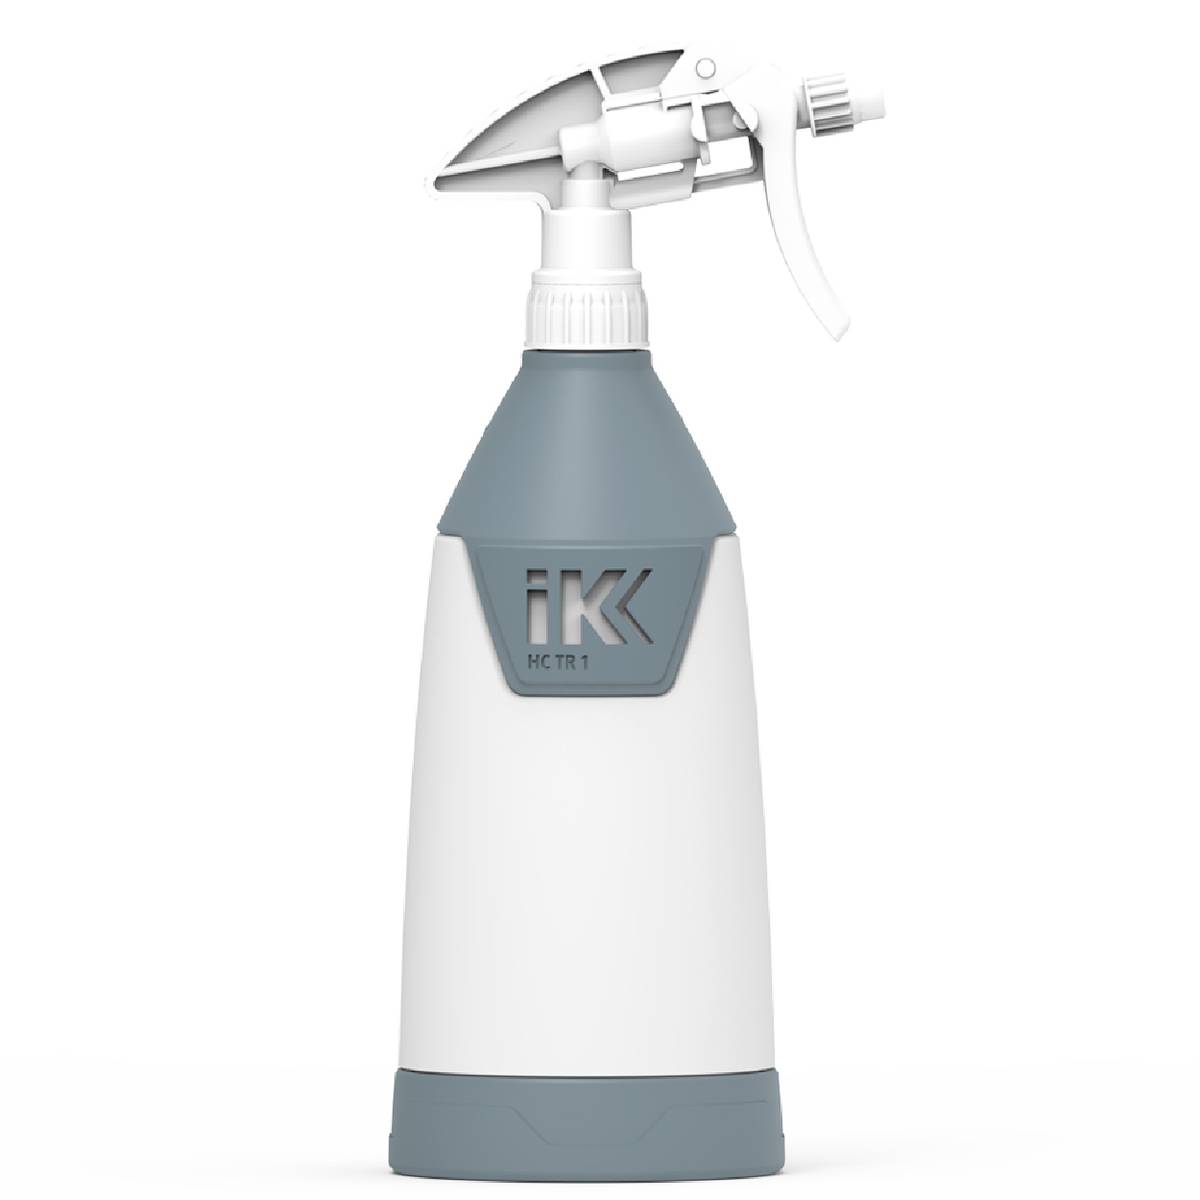 IK Sprayers sprayflaske HC TR 1 - Garasjekos.no